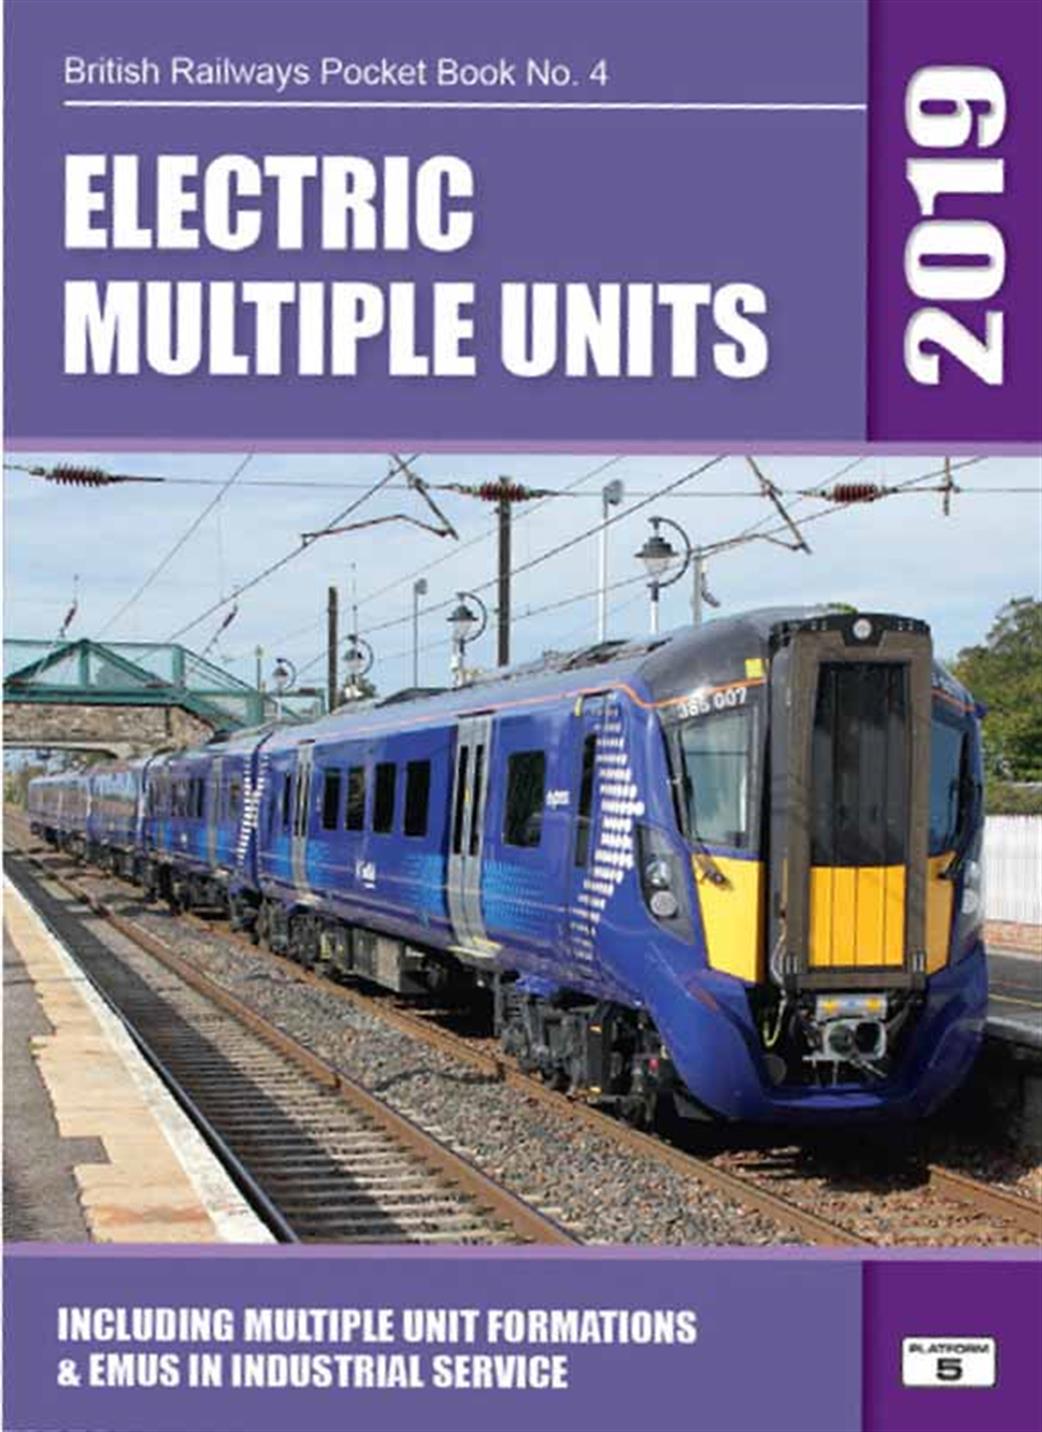 Platform 5 BRPB4 19 British Railways Electiric Multiple Units 2019 Pocket Book